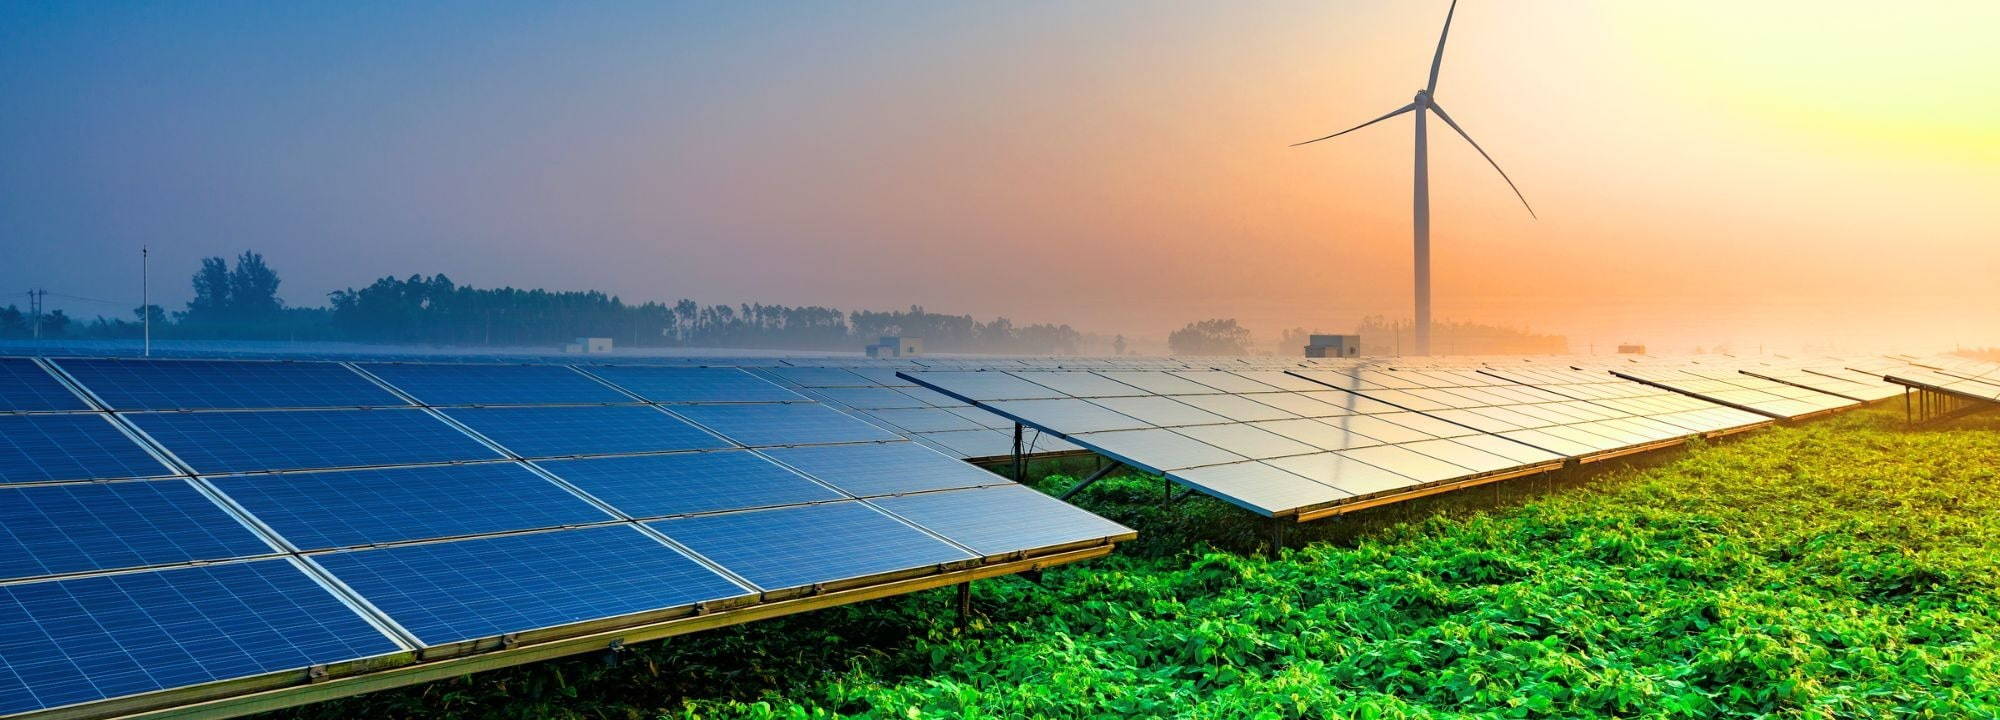 Madrid Renewable Energy